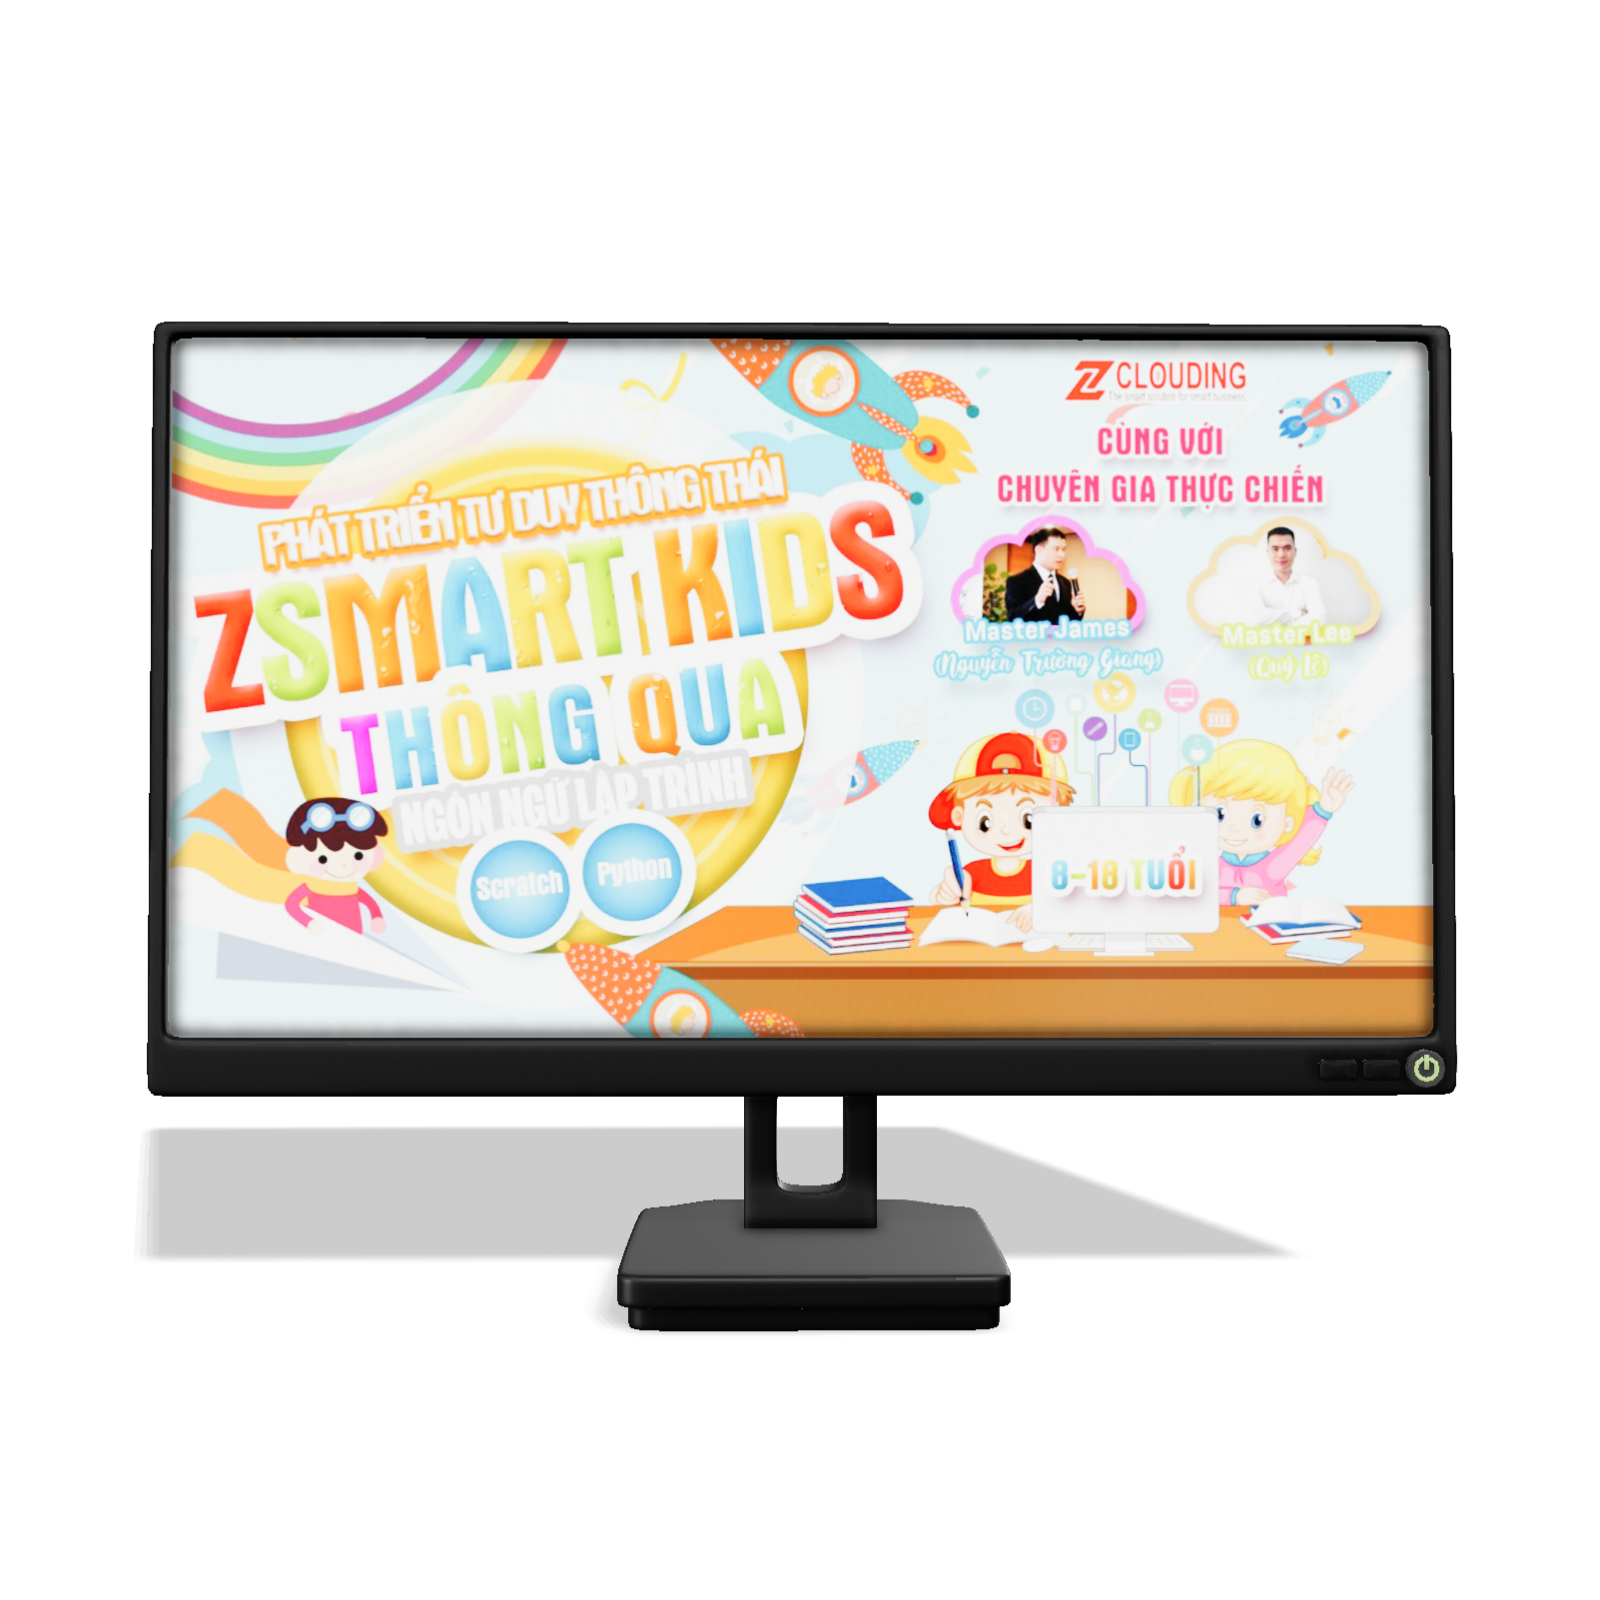 Z Smart Kids with Scratch Basic 123